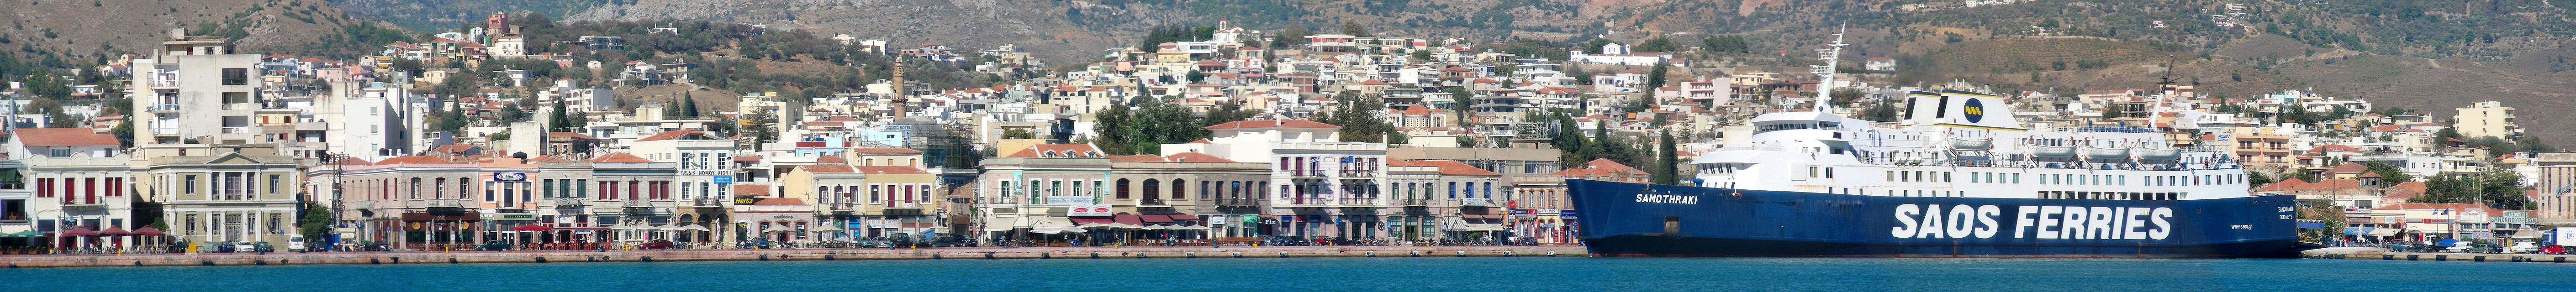 Hafenfront Chios-Stadt